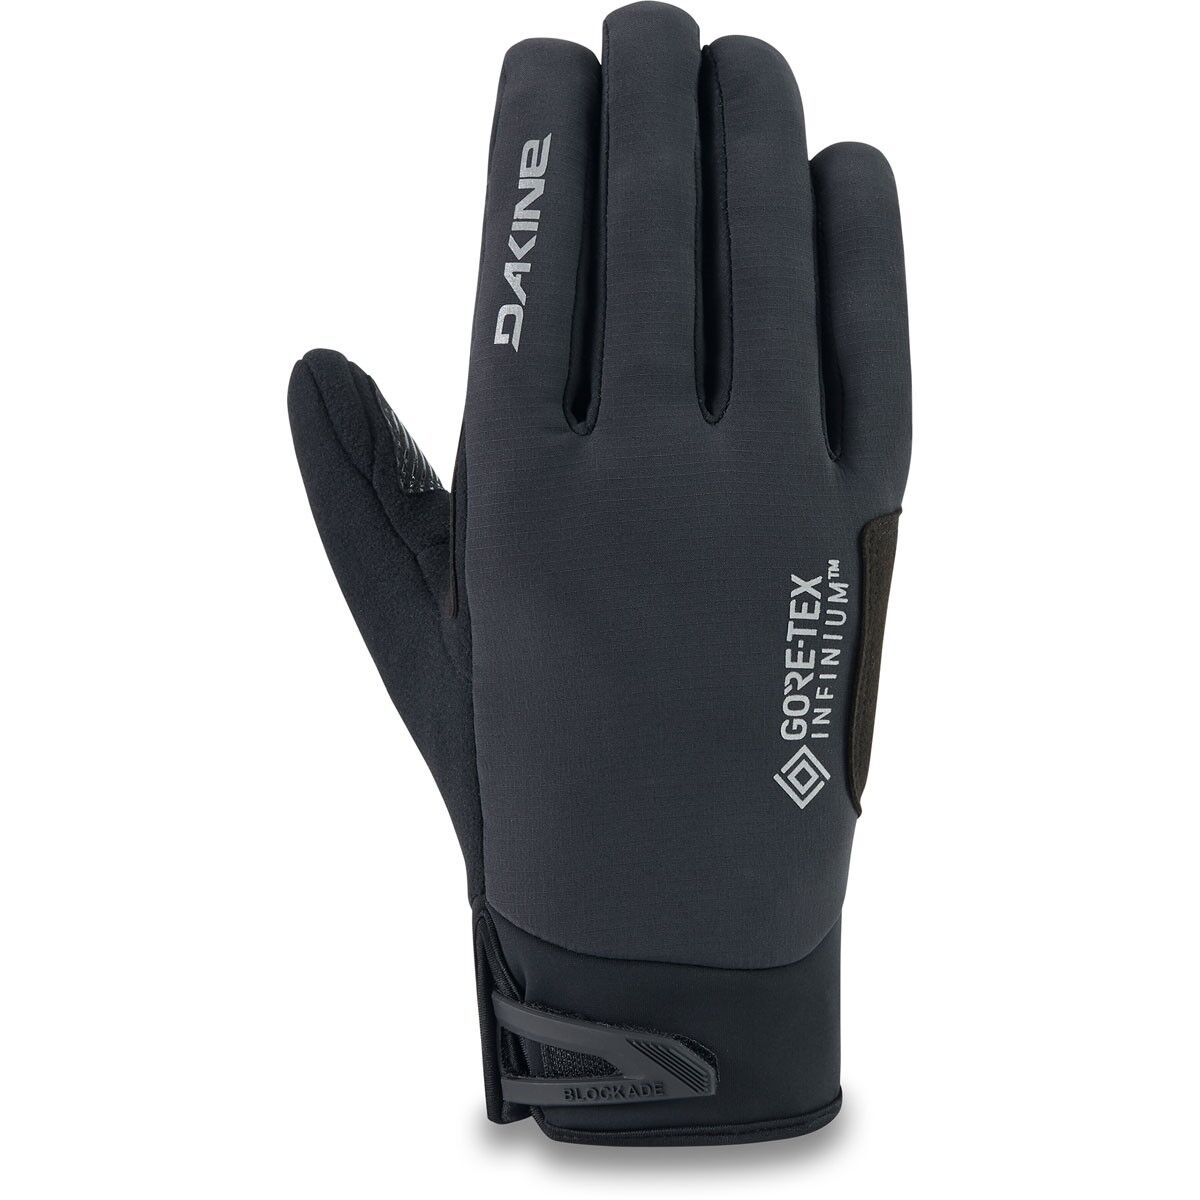 Dakine Blockade Glove - Handschuhe - Herren